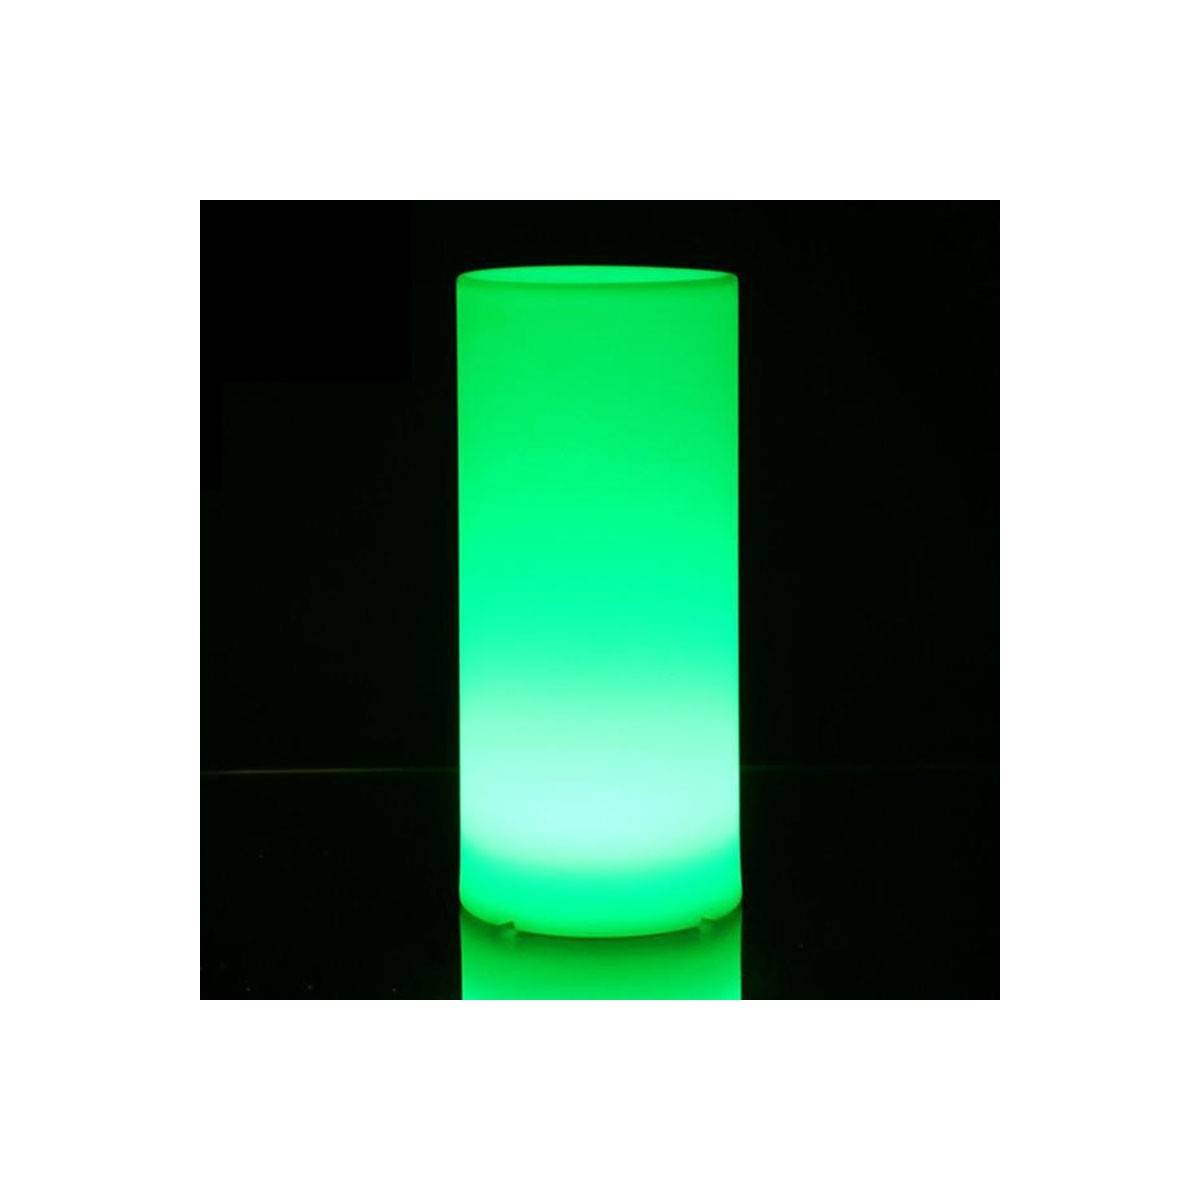 Vaso LED RGBW de Resina Branca 40X115CM 7W IP65 sem fio